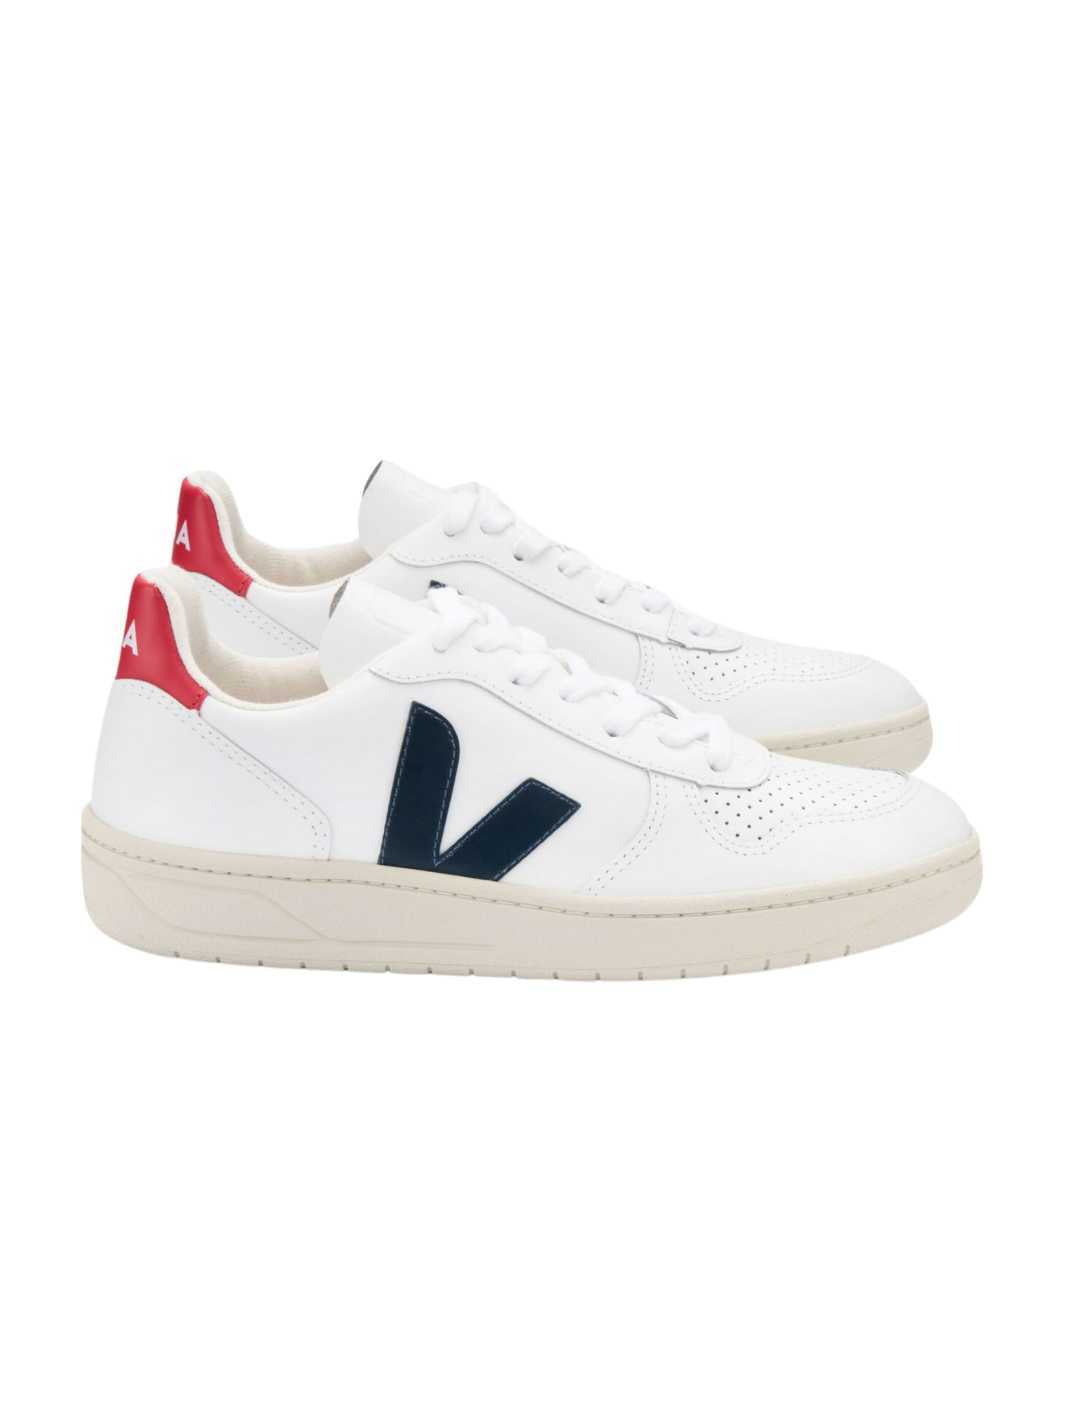 Veja Shoes Sneakers | V10 Leather White Nautico